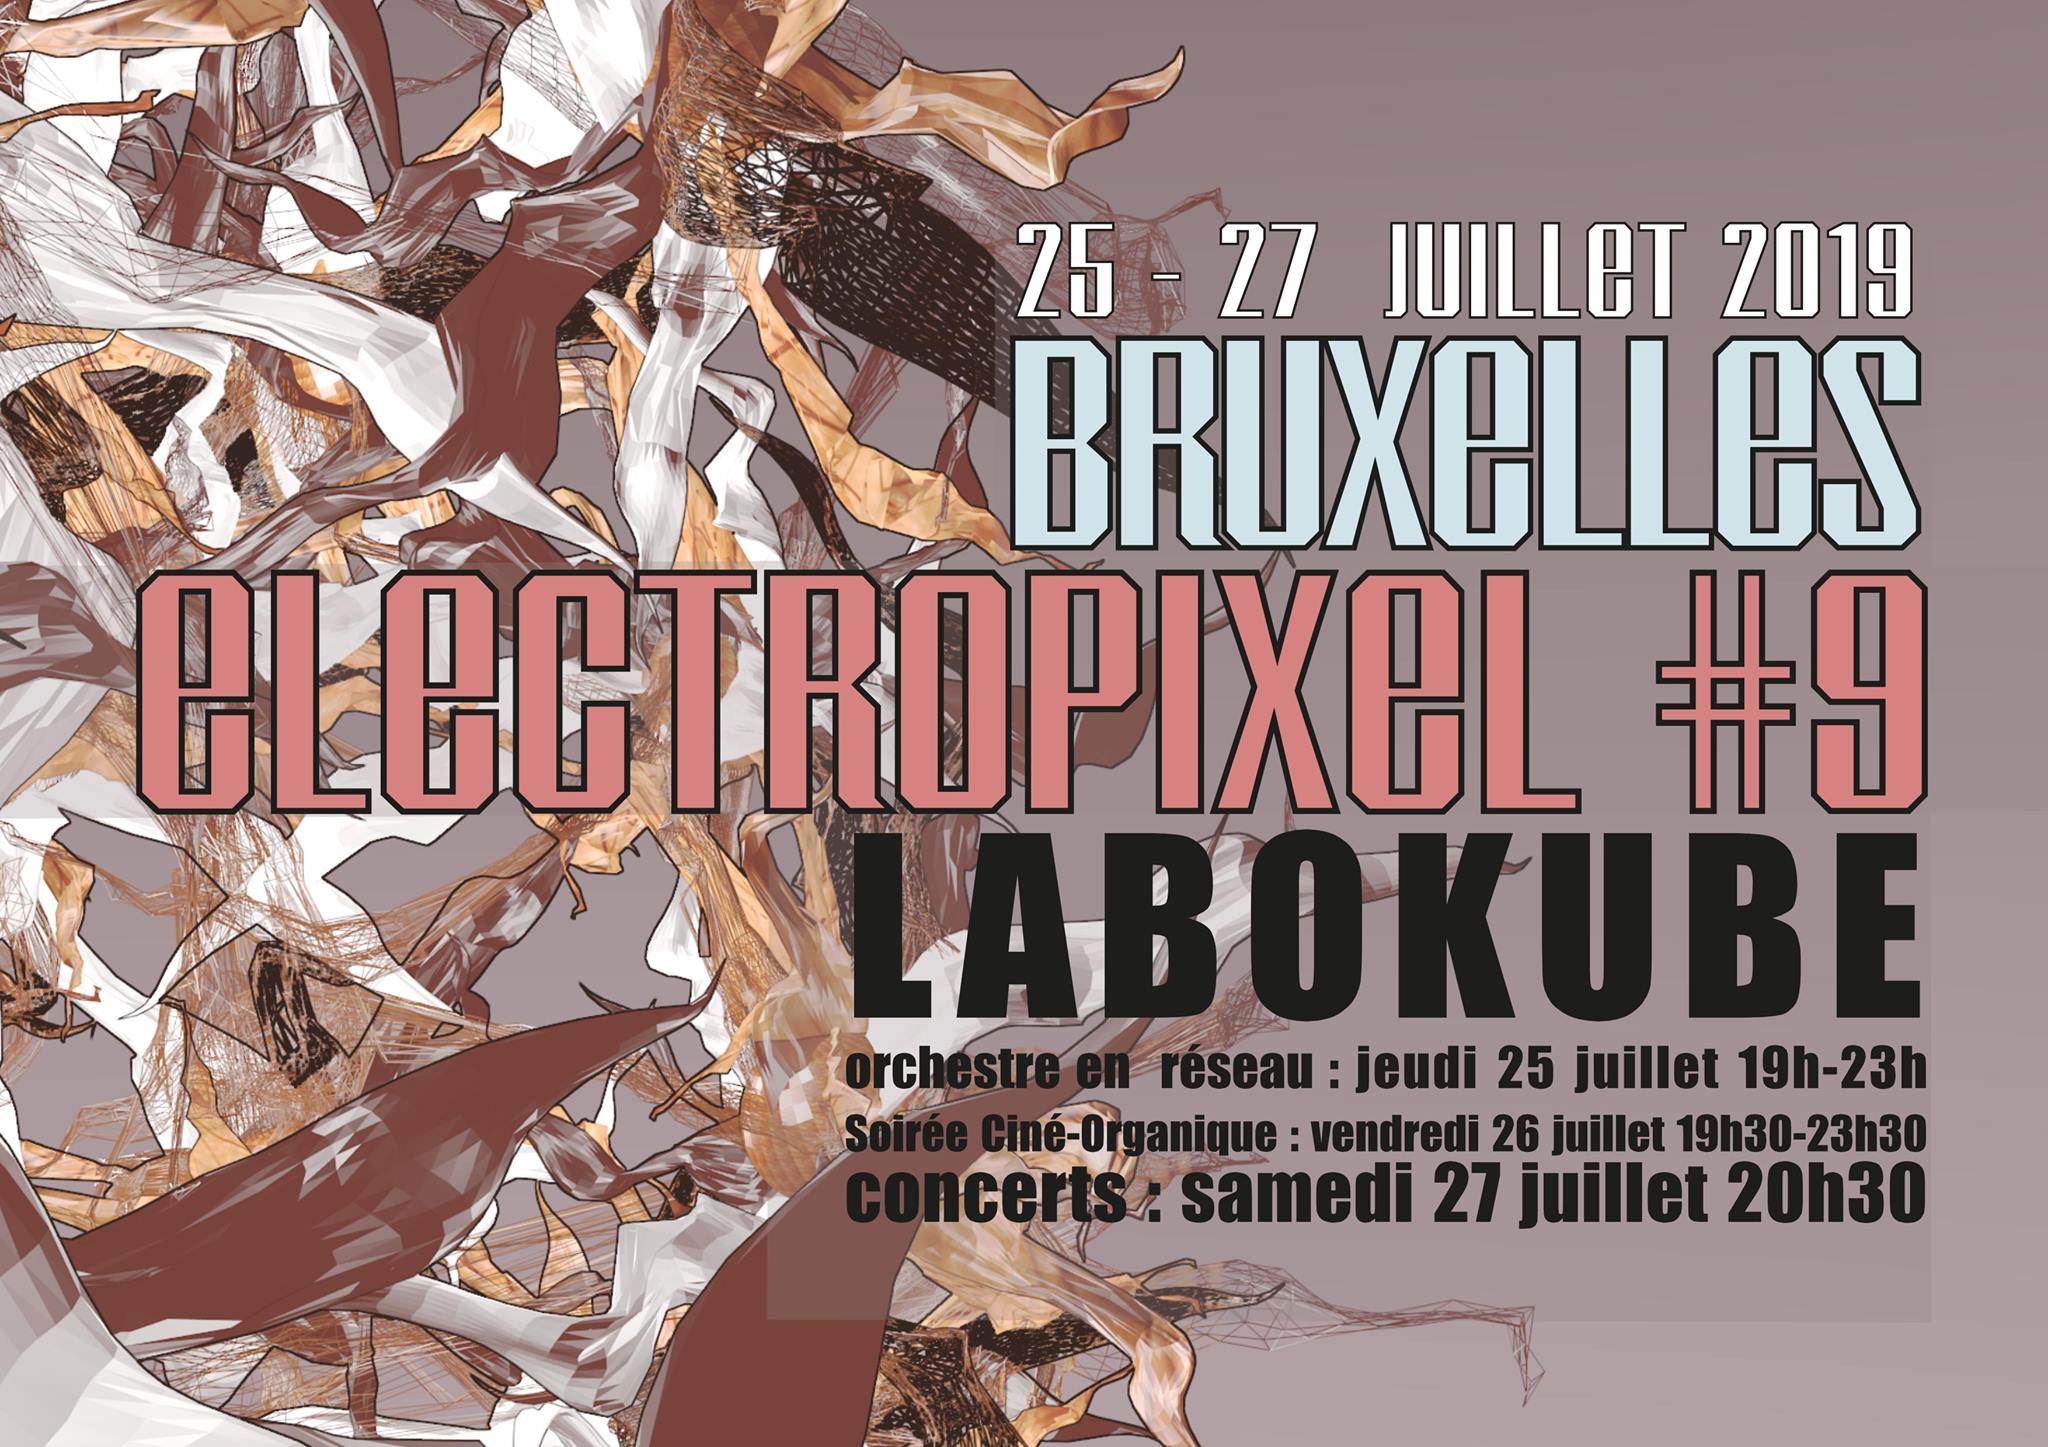 Electropixel #9 – du 24 juillet au 28 juillet : Bruxelles